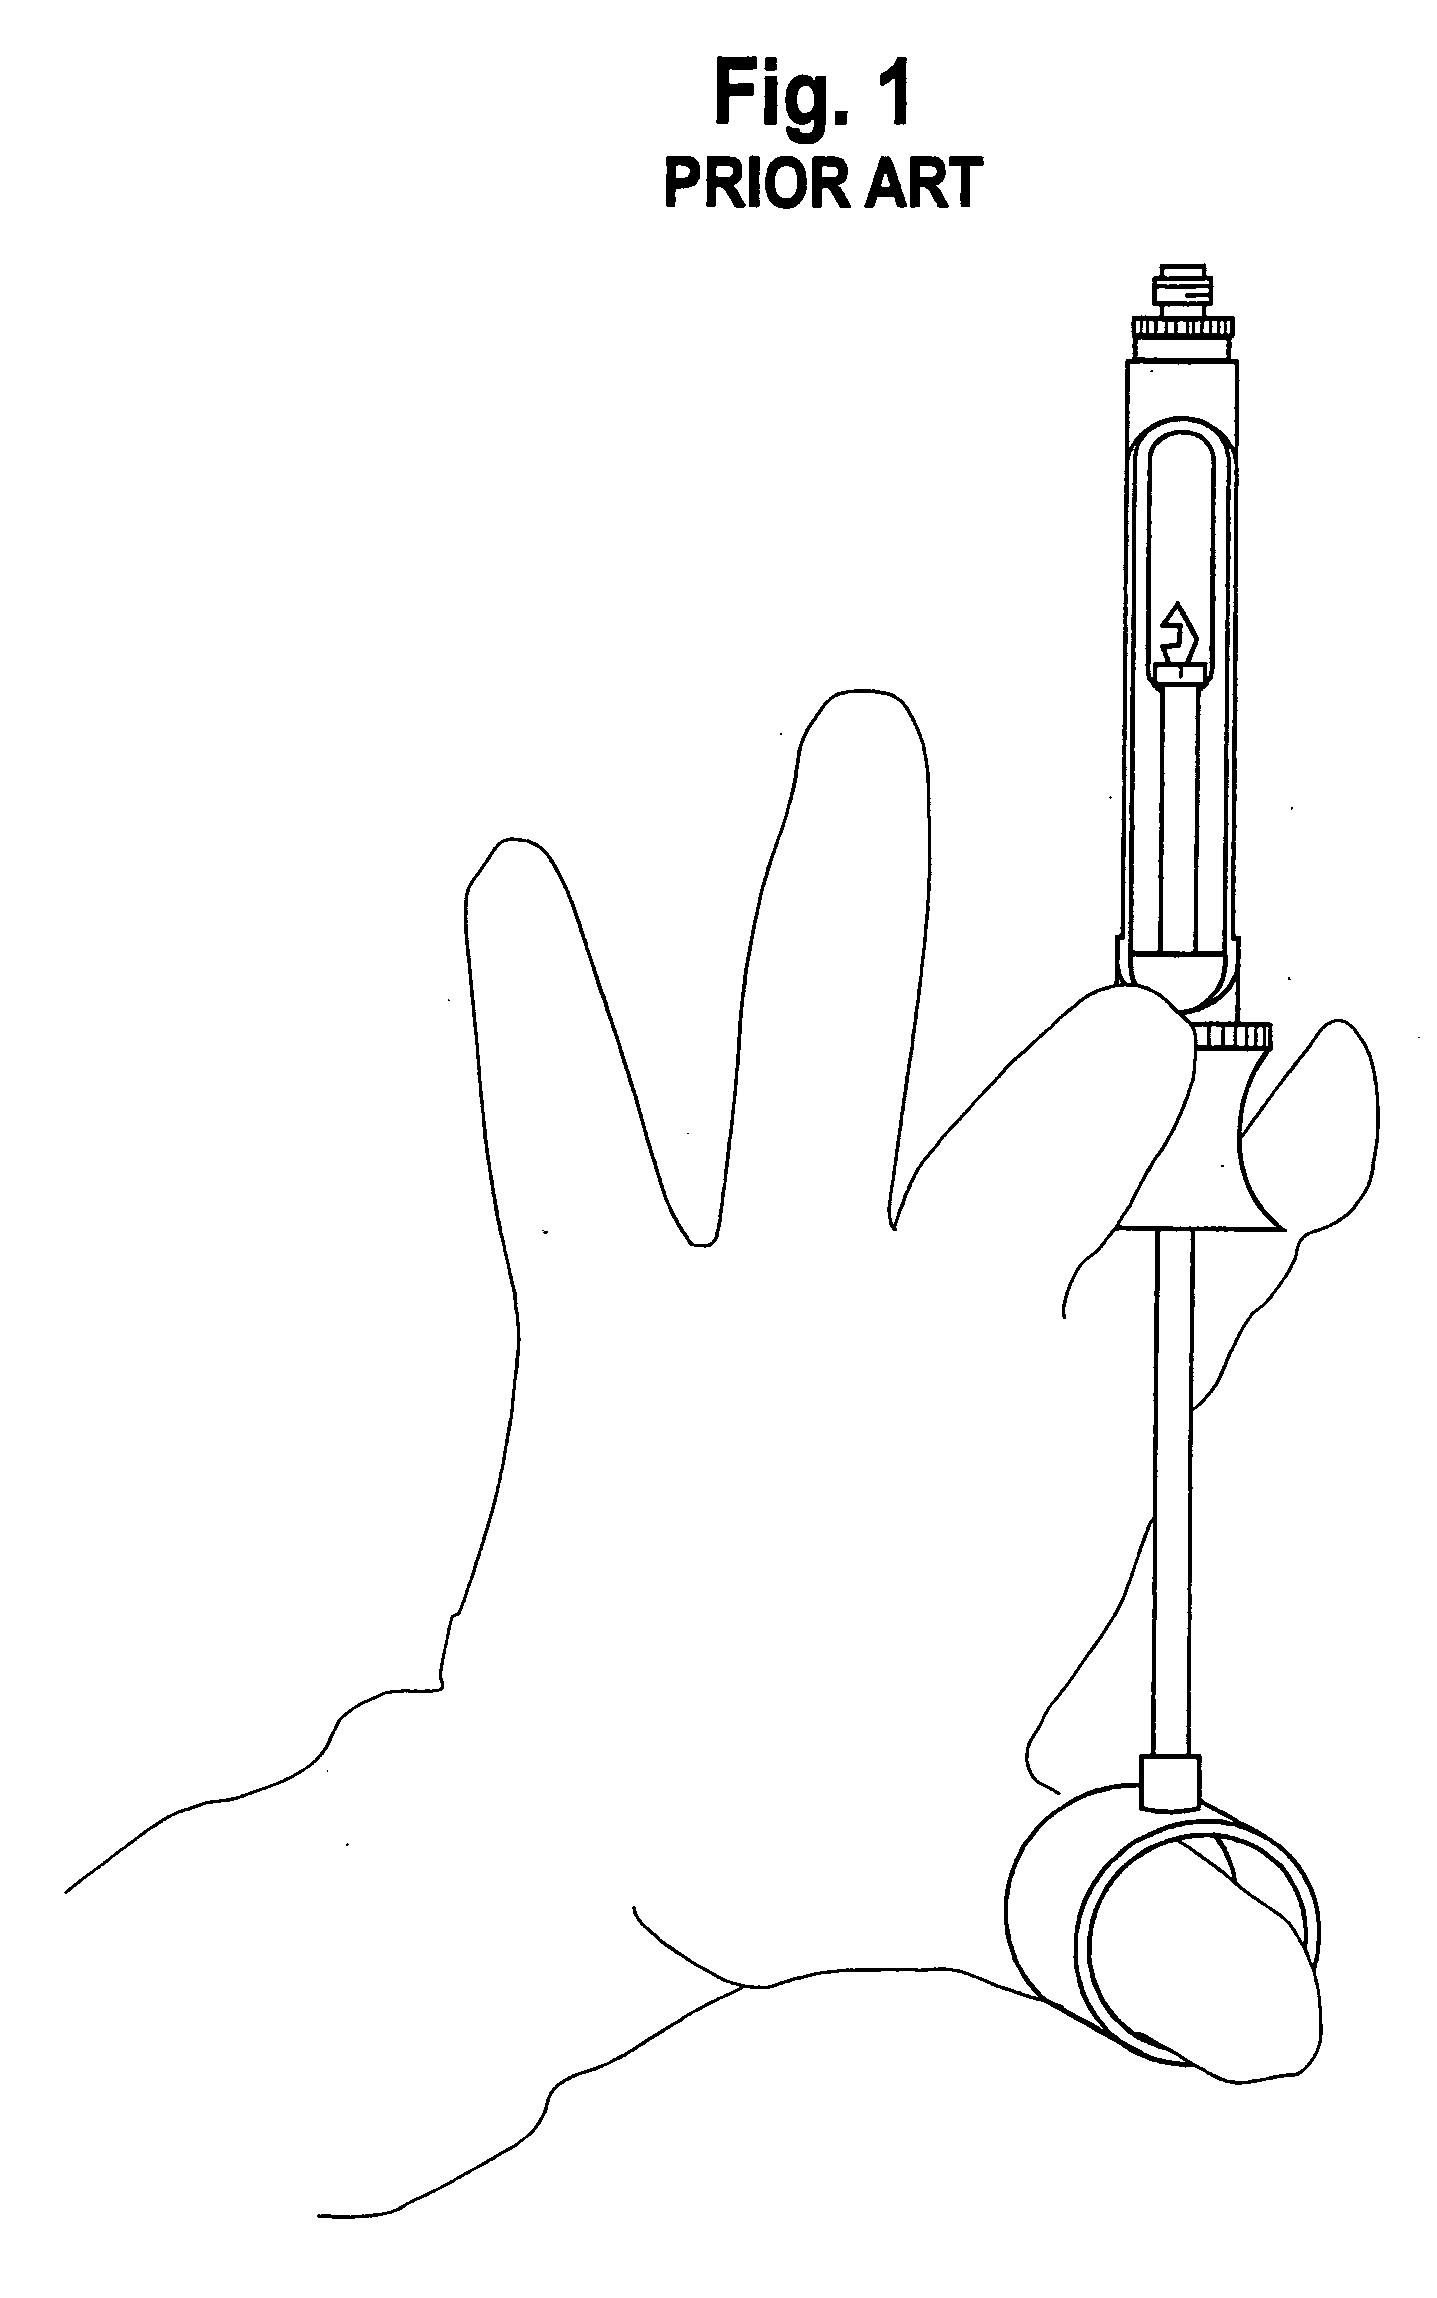 Syringe with split/adjustable thumb ring